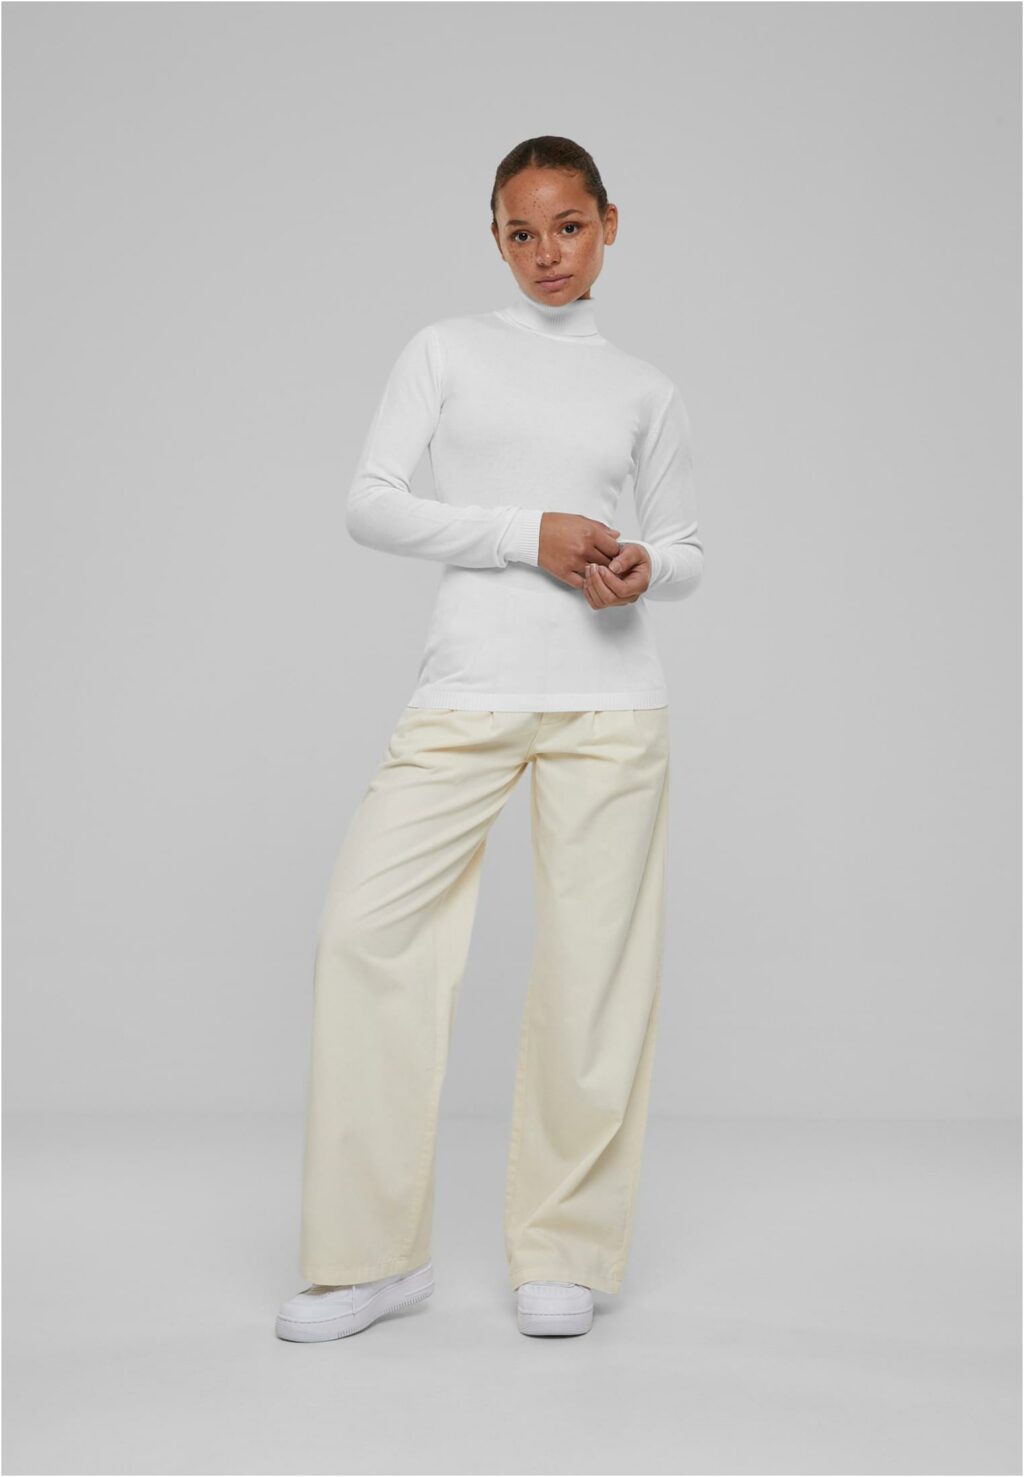 Urban Classics Ladies Knitted Turtleneck Sweater white TB6115